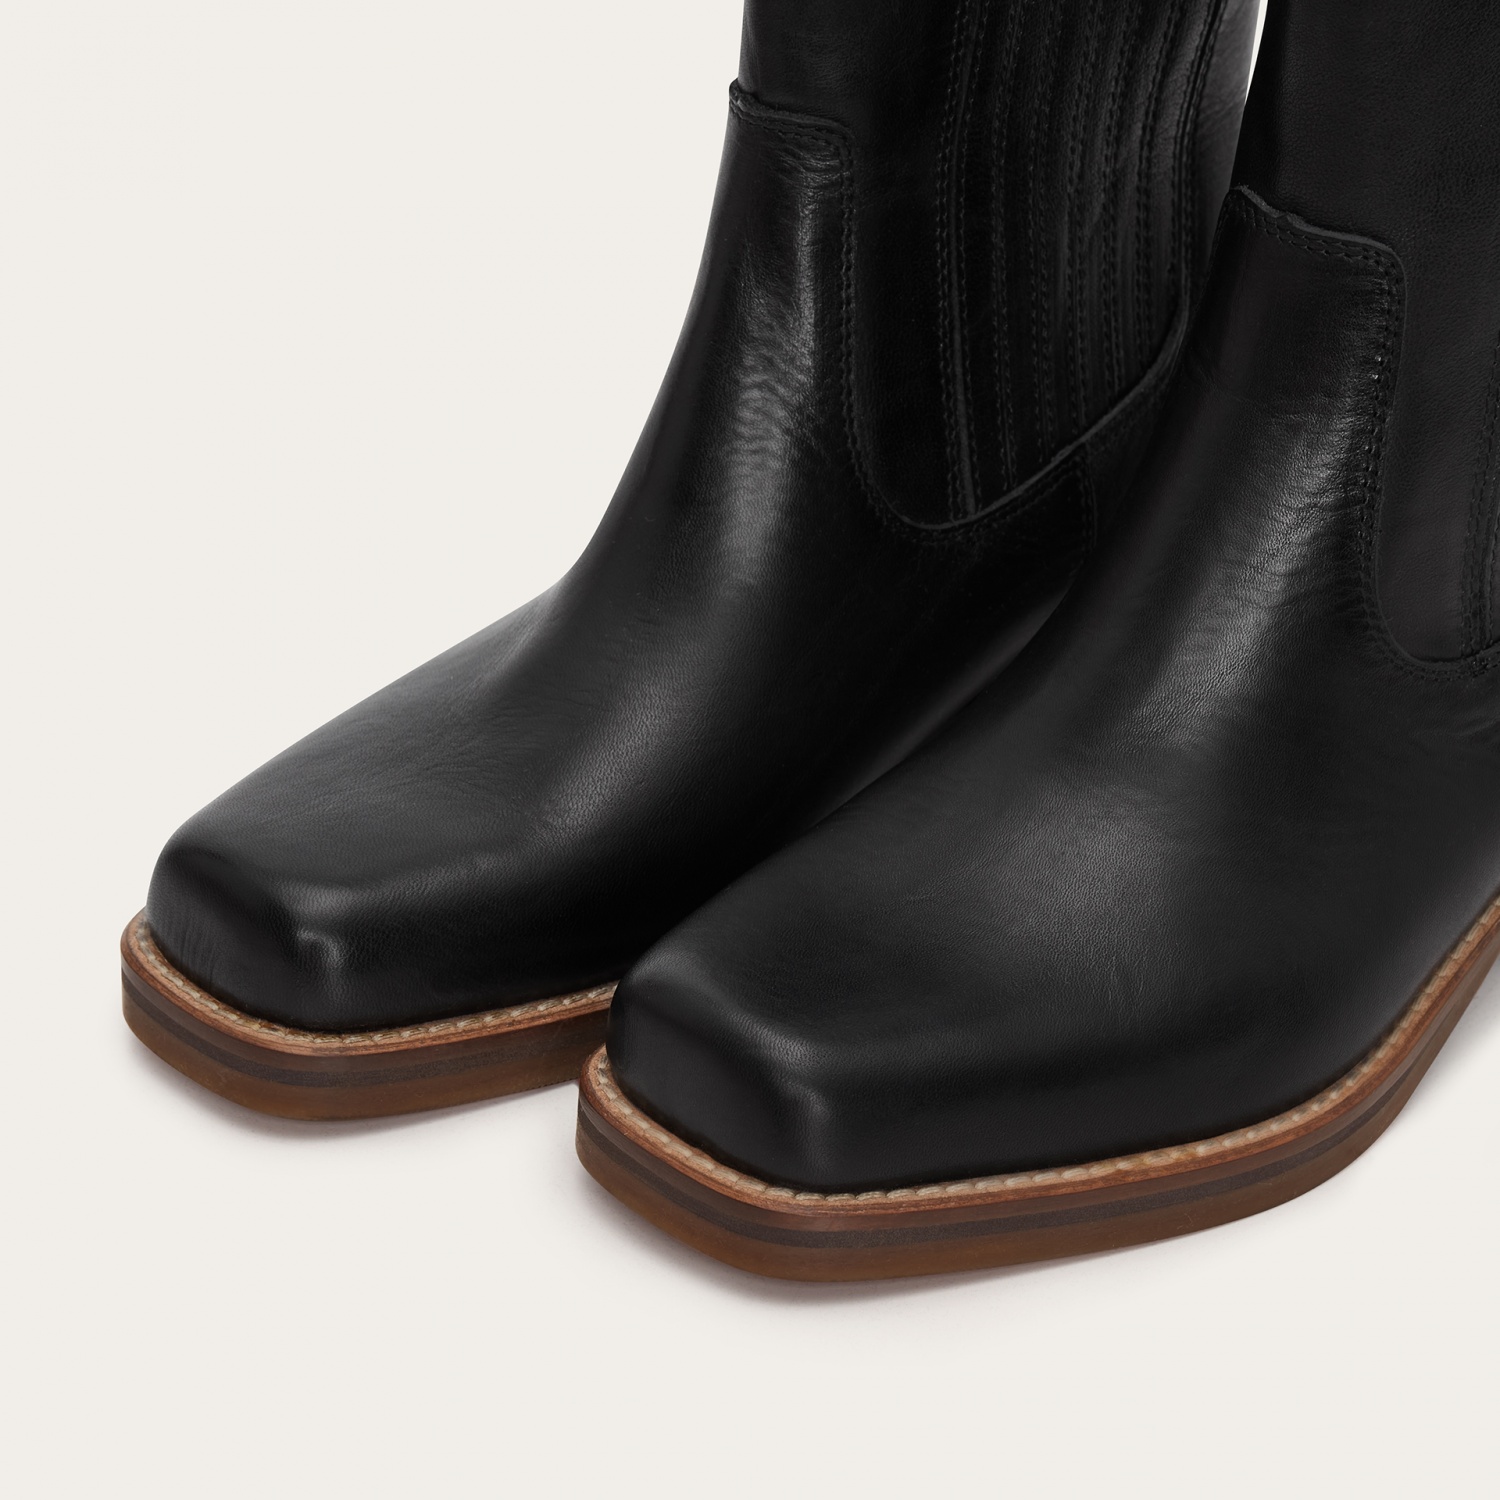  Rokev cowboy boots, black-2 